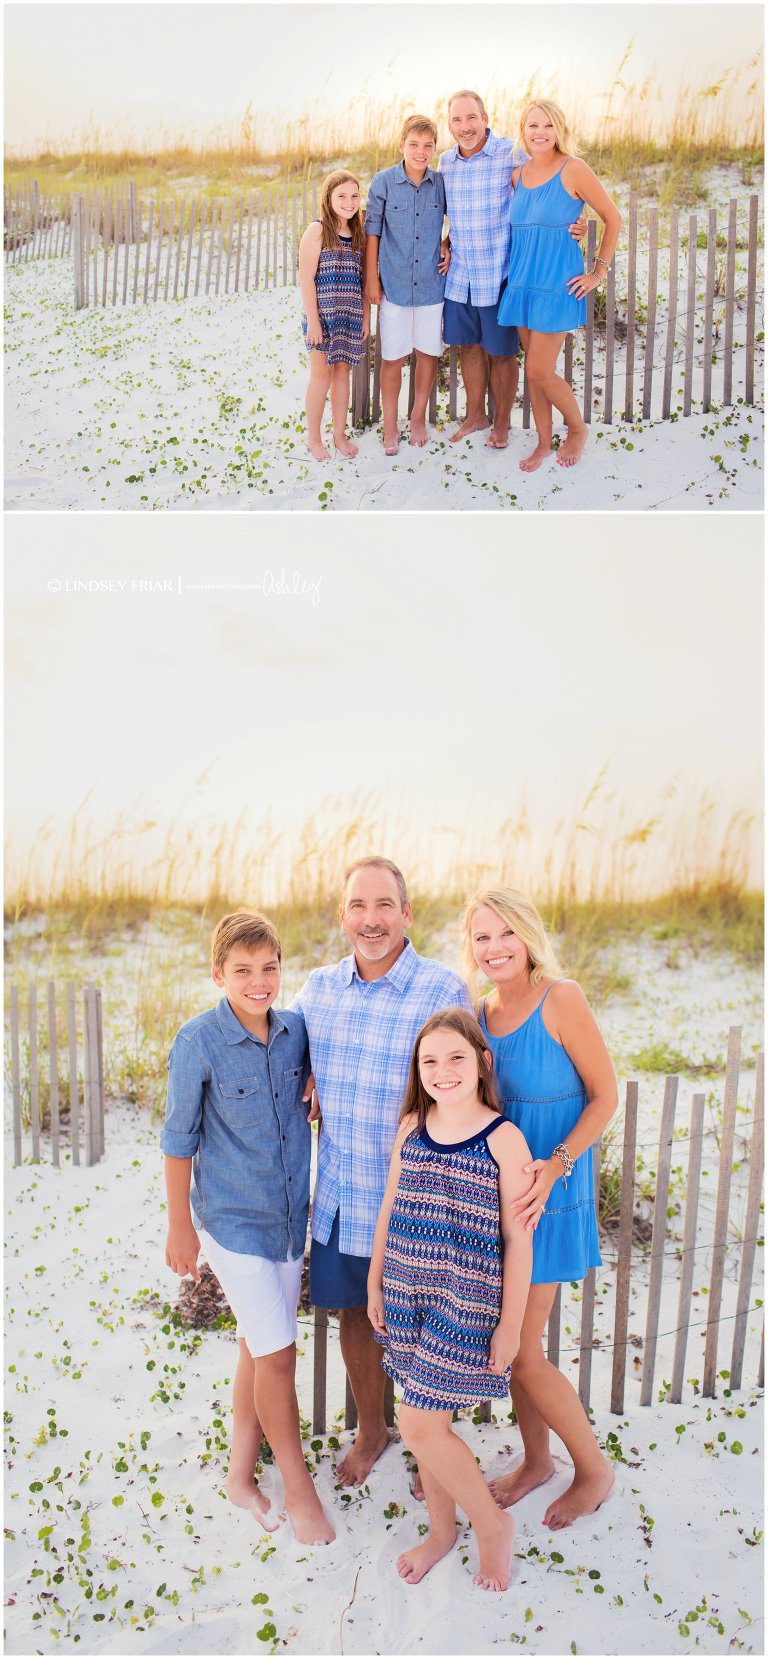 Pensacola Beach, Florida Family Photographer - Lindsey Friar Photography 2015